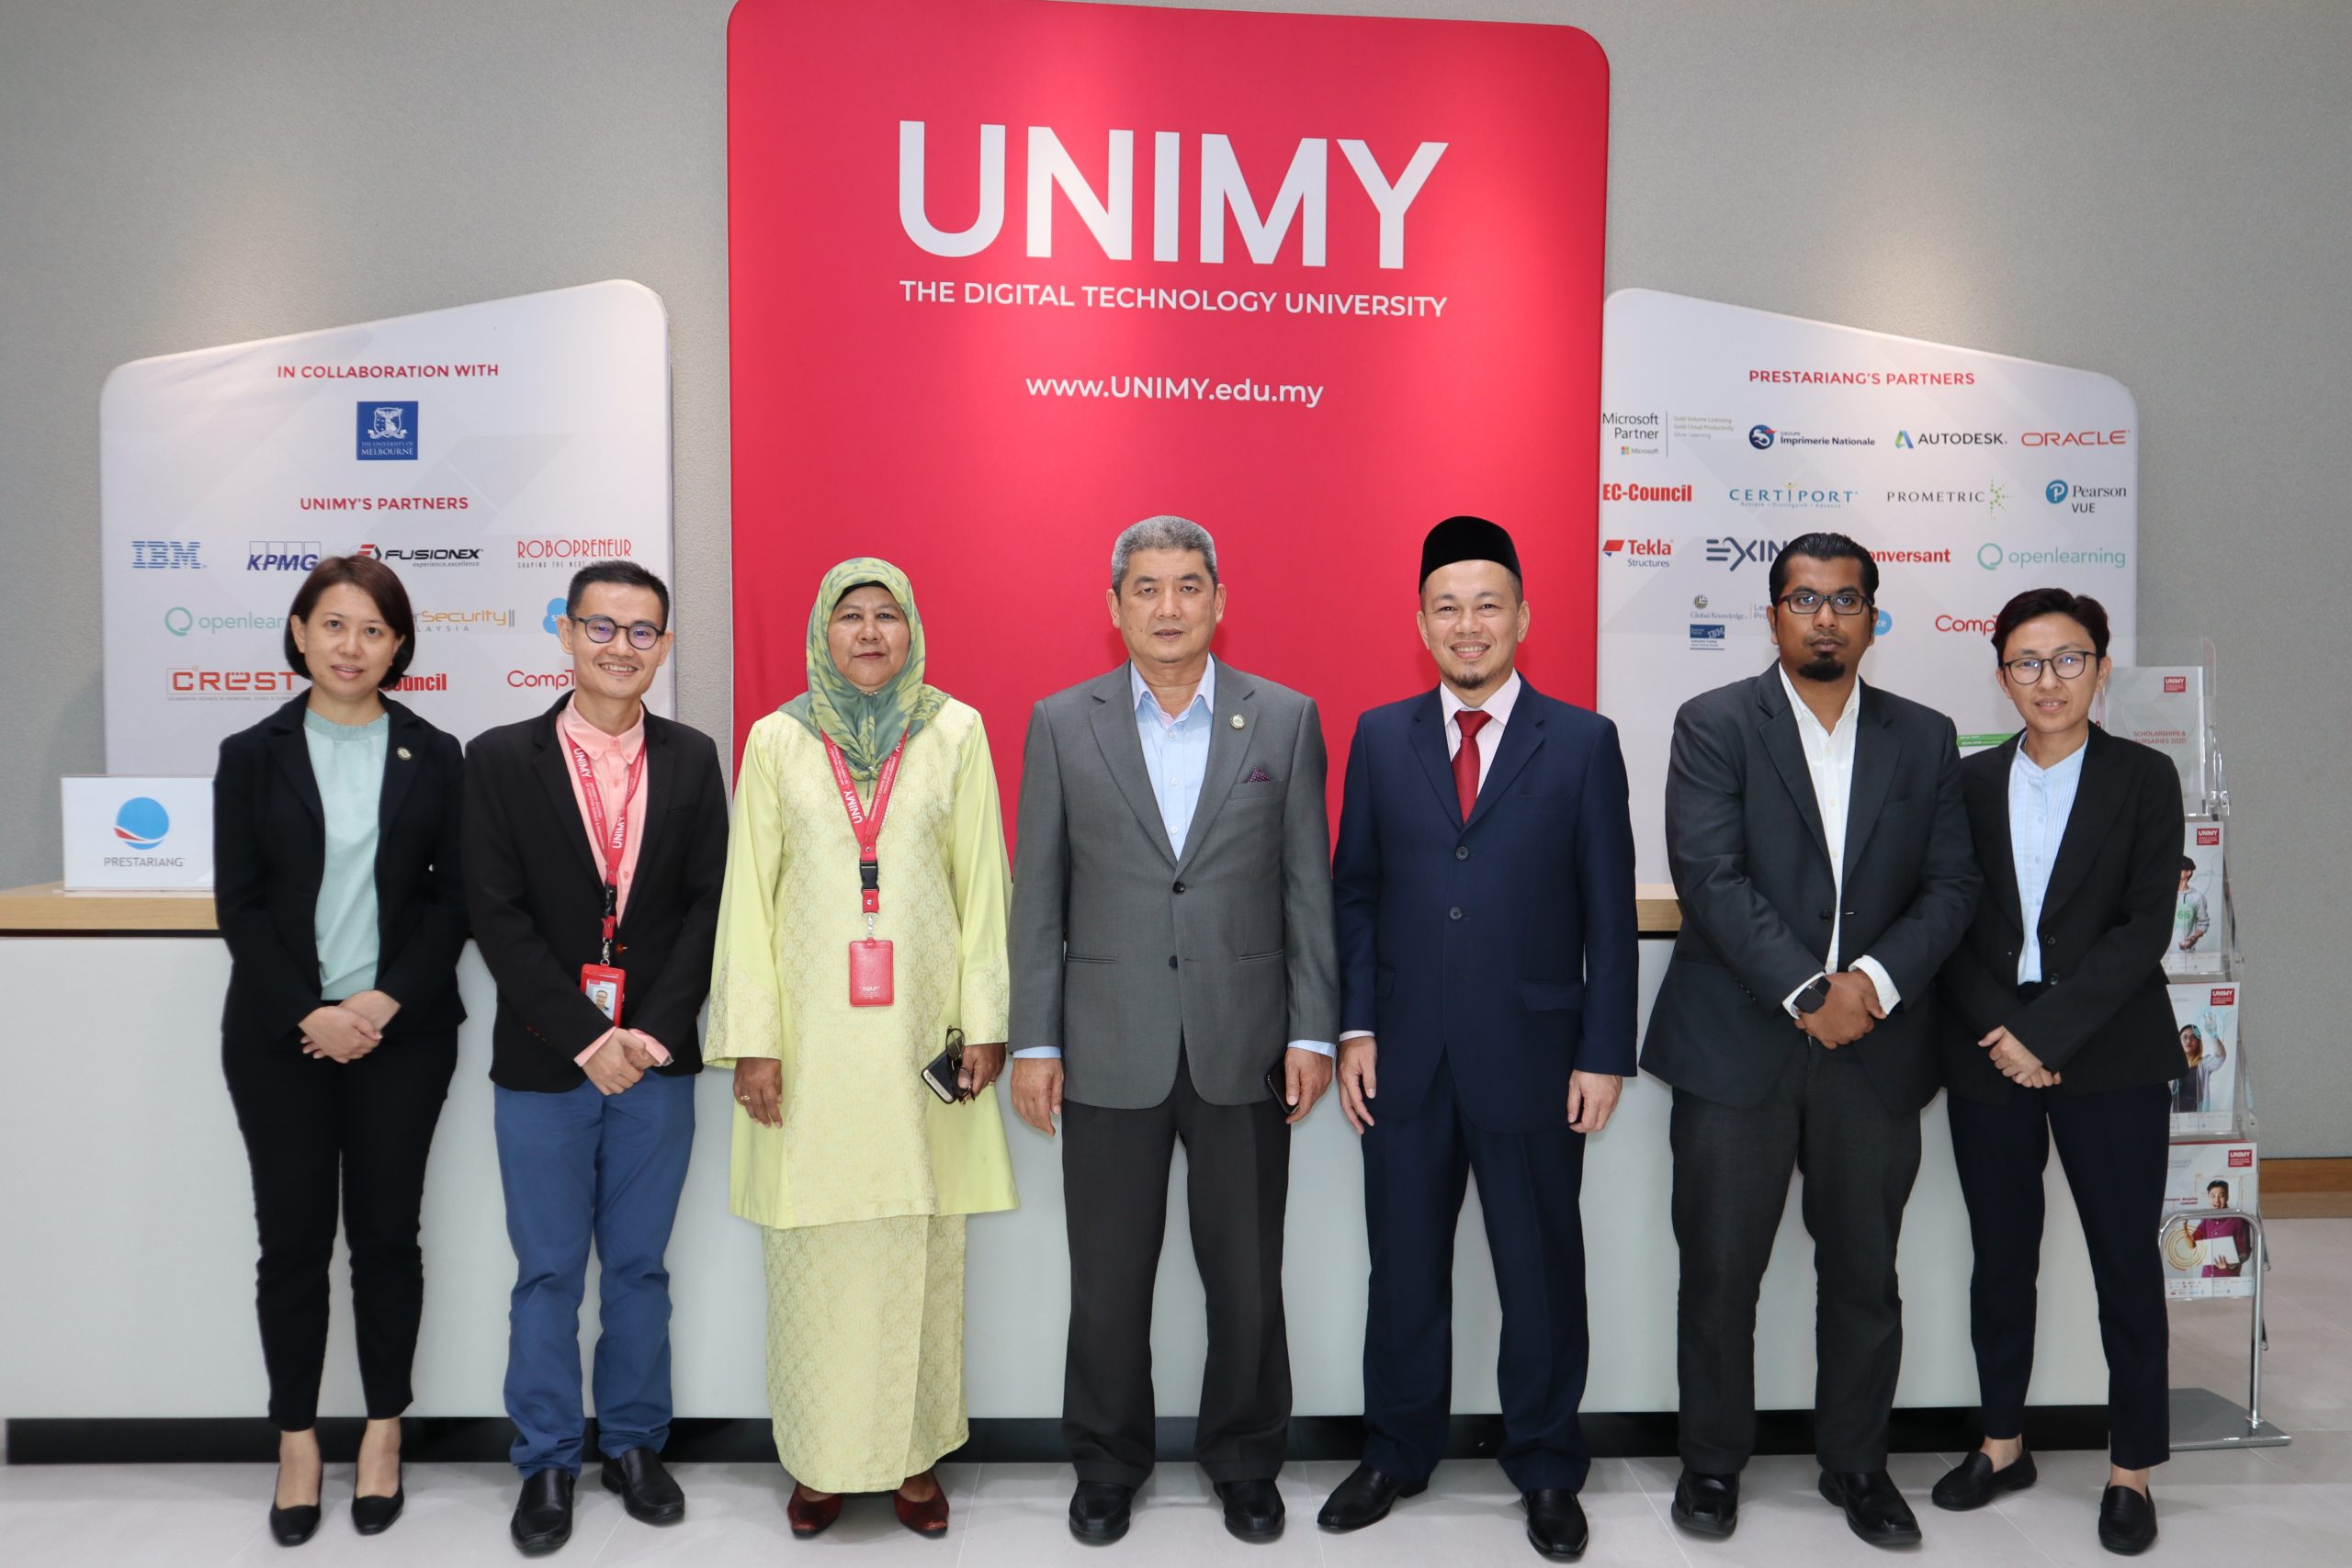 Serba Dinamik Group Acquired Entire Business Of Unimy Campus In Cyberjaya Serba Dinamik Holdings Berhad